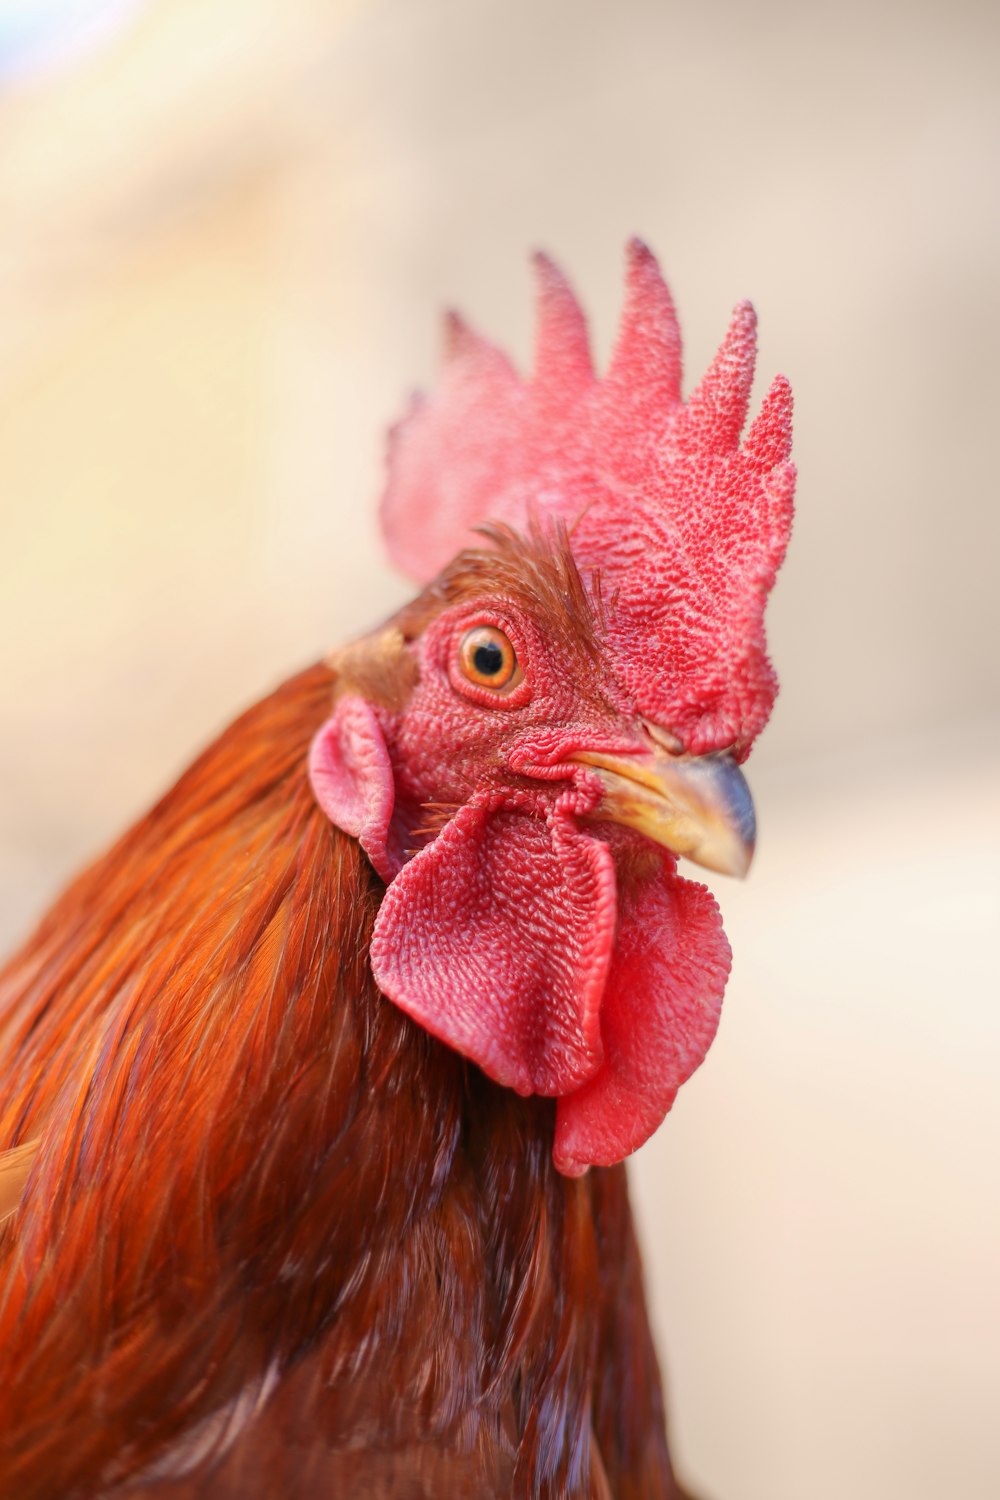 flyde over kollektion begå Red rooster in close up photography photo – Free Animal Image on Unsplash